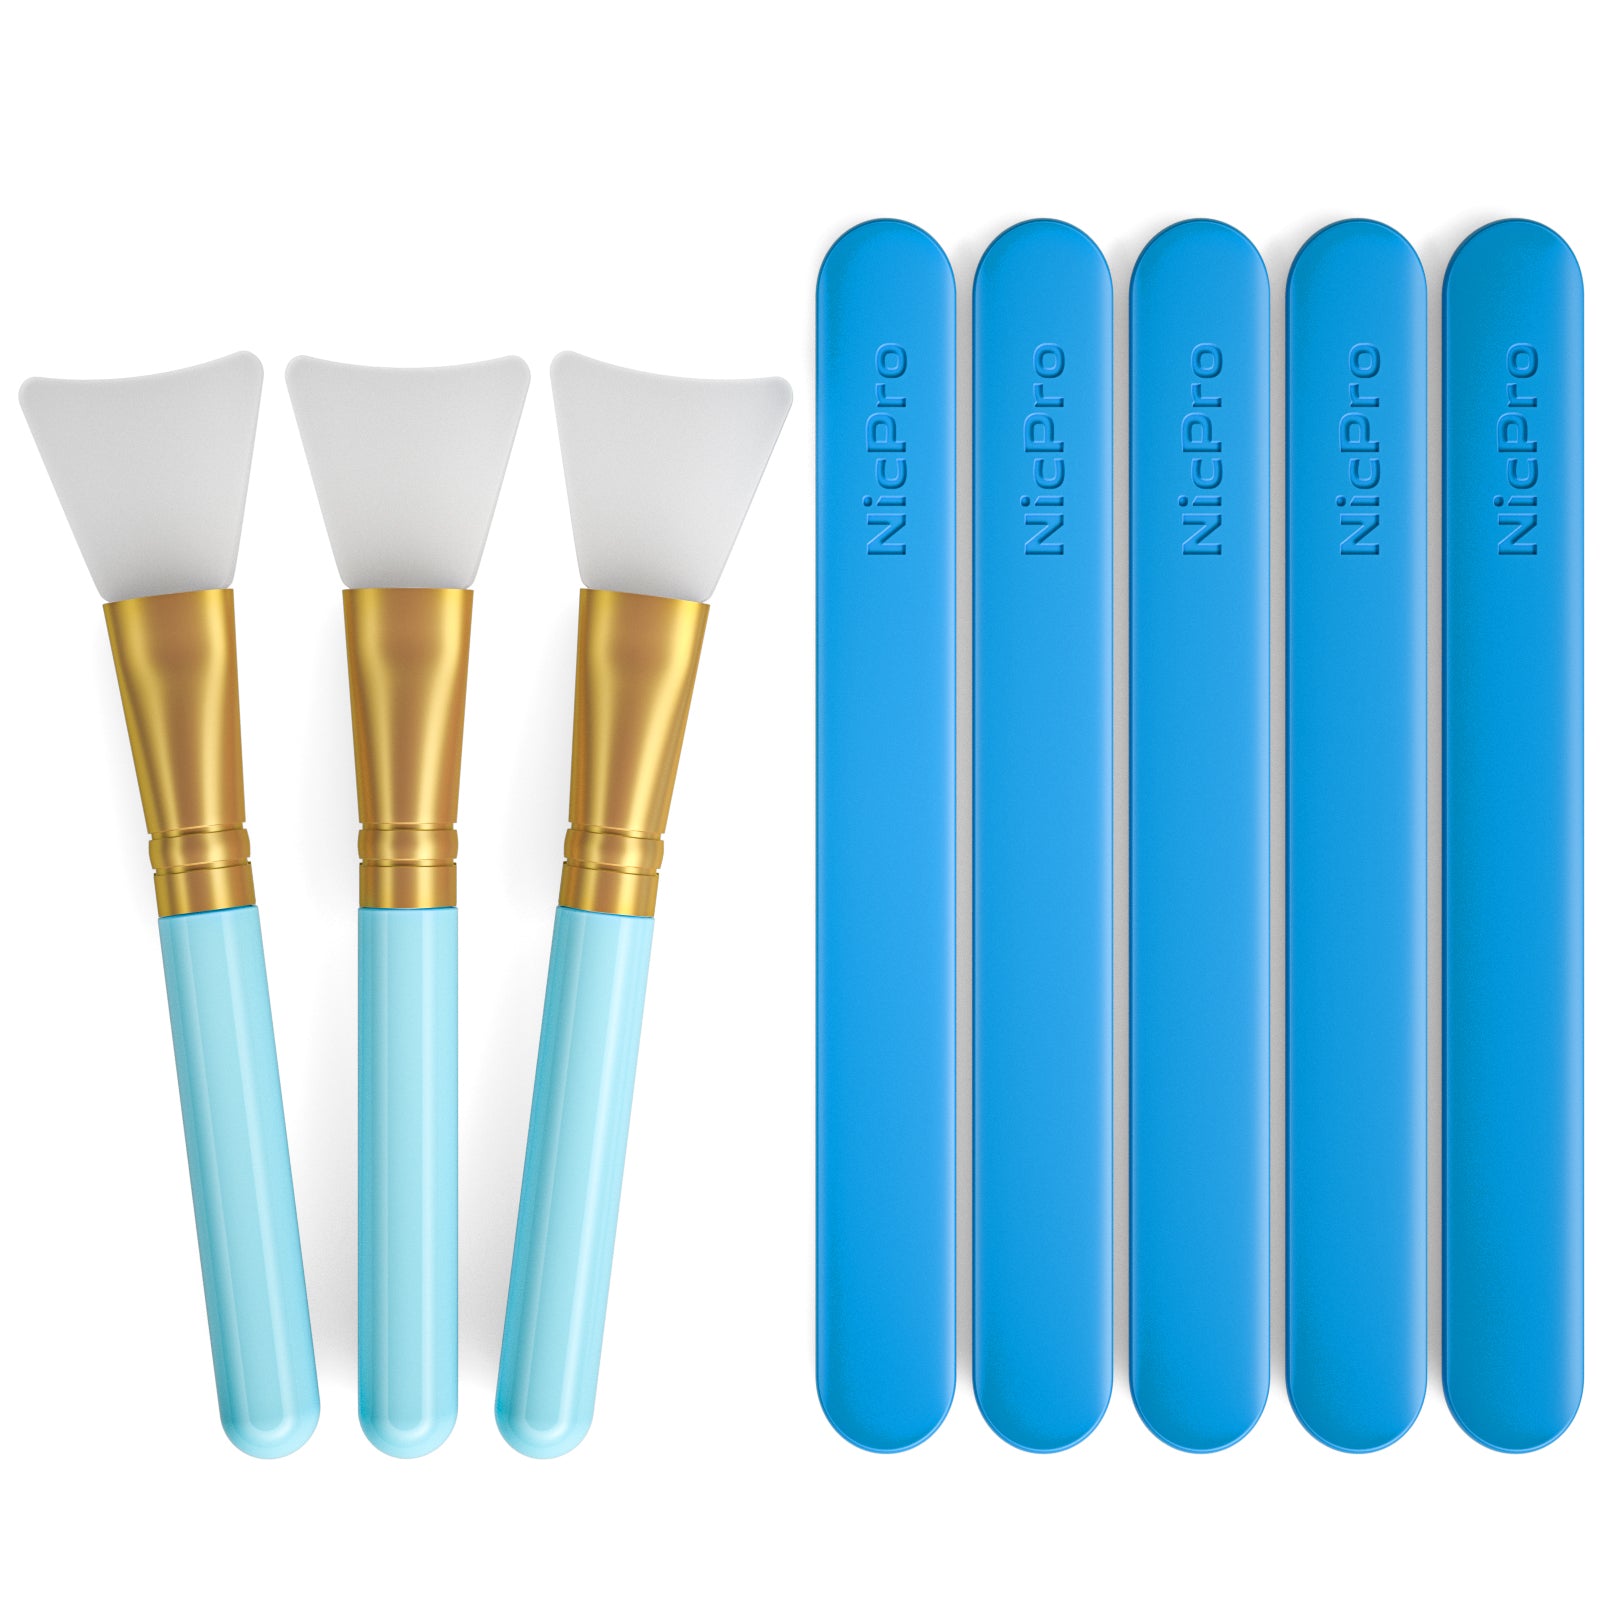 Nicpro 5PCS Silicone Stir Sticks, Reusable Silicone Popsicle Sticks wi